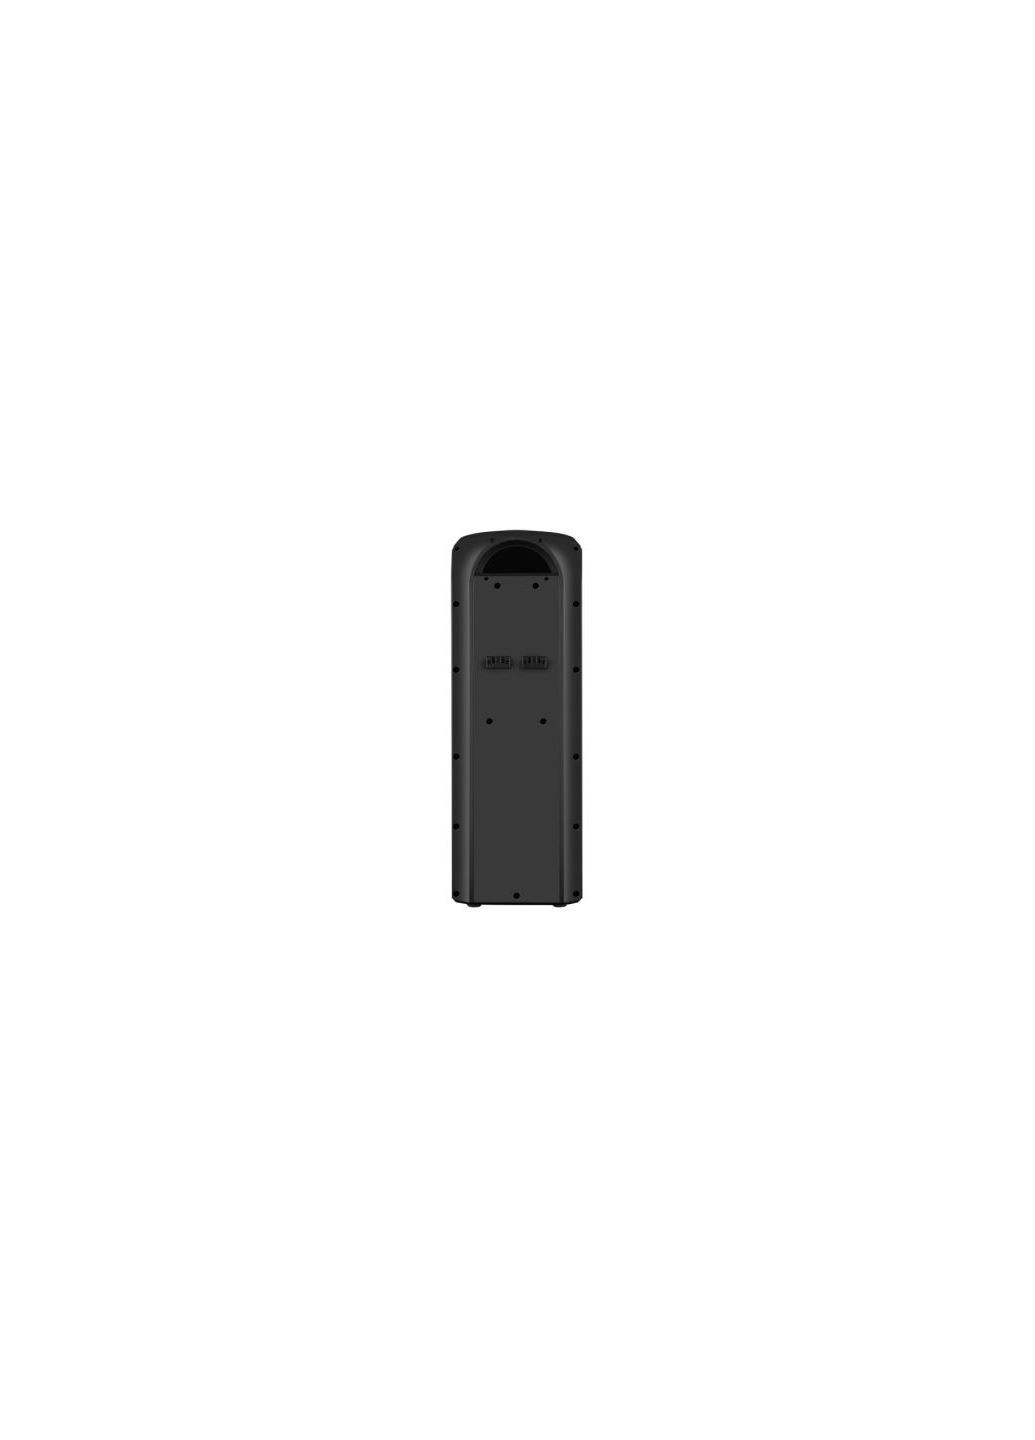 Акустическая система PS750 Black Sven ps-750 black (275102471)